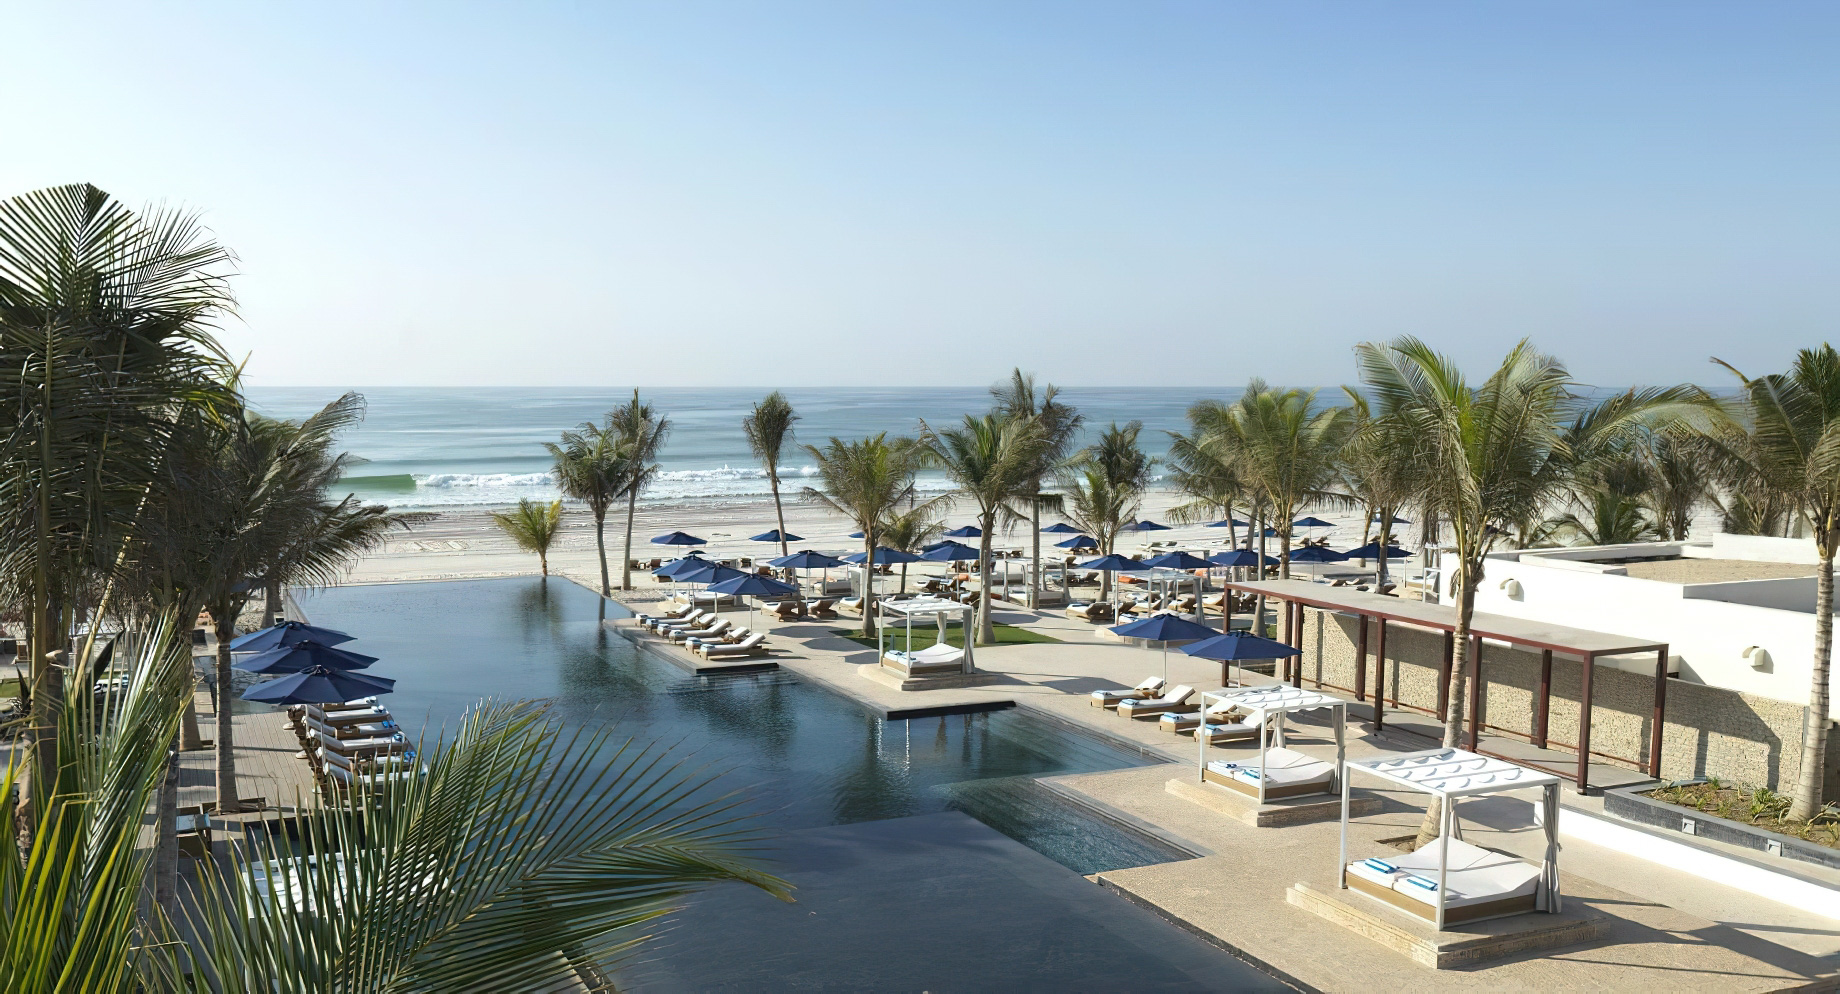 Al Baleed Resort Salalah by Anantara - Oman - Pool Deck Beach View Aerial